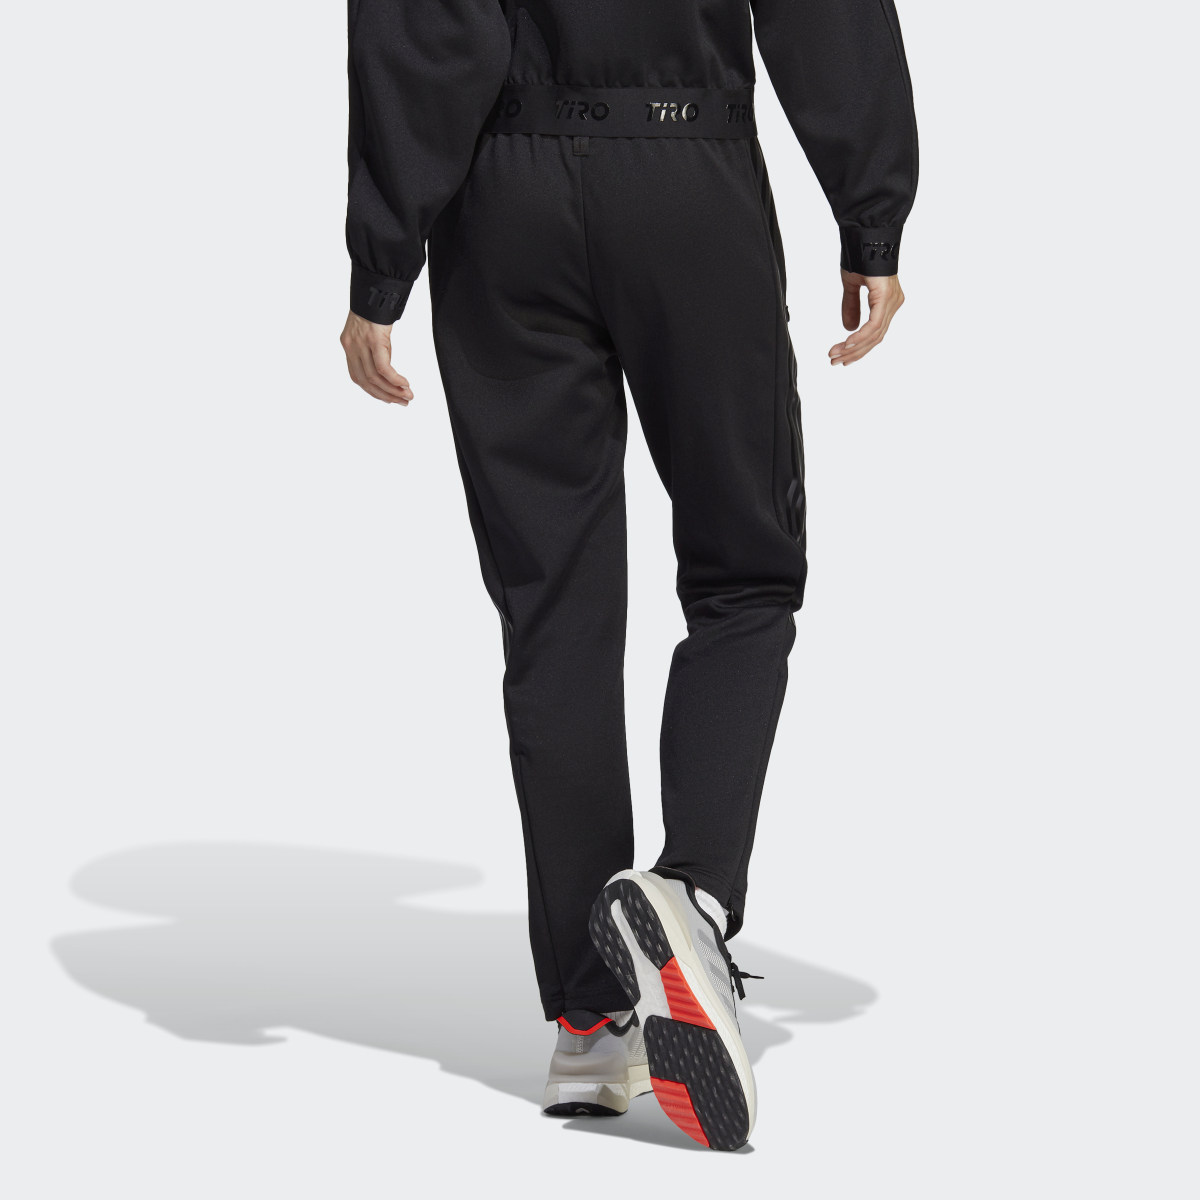 Adidas Pants Deportivos Tiro Suit-Up Advanced. 5